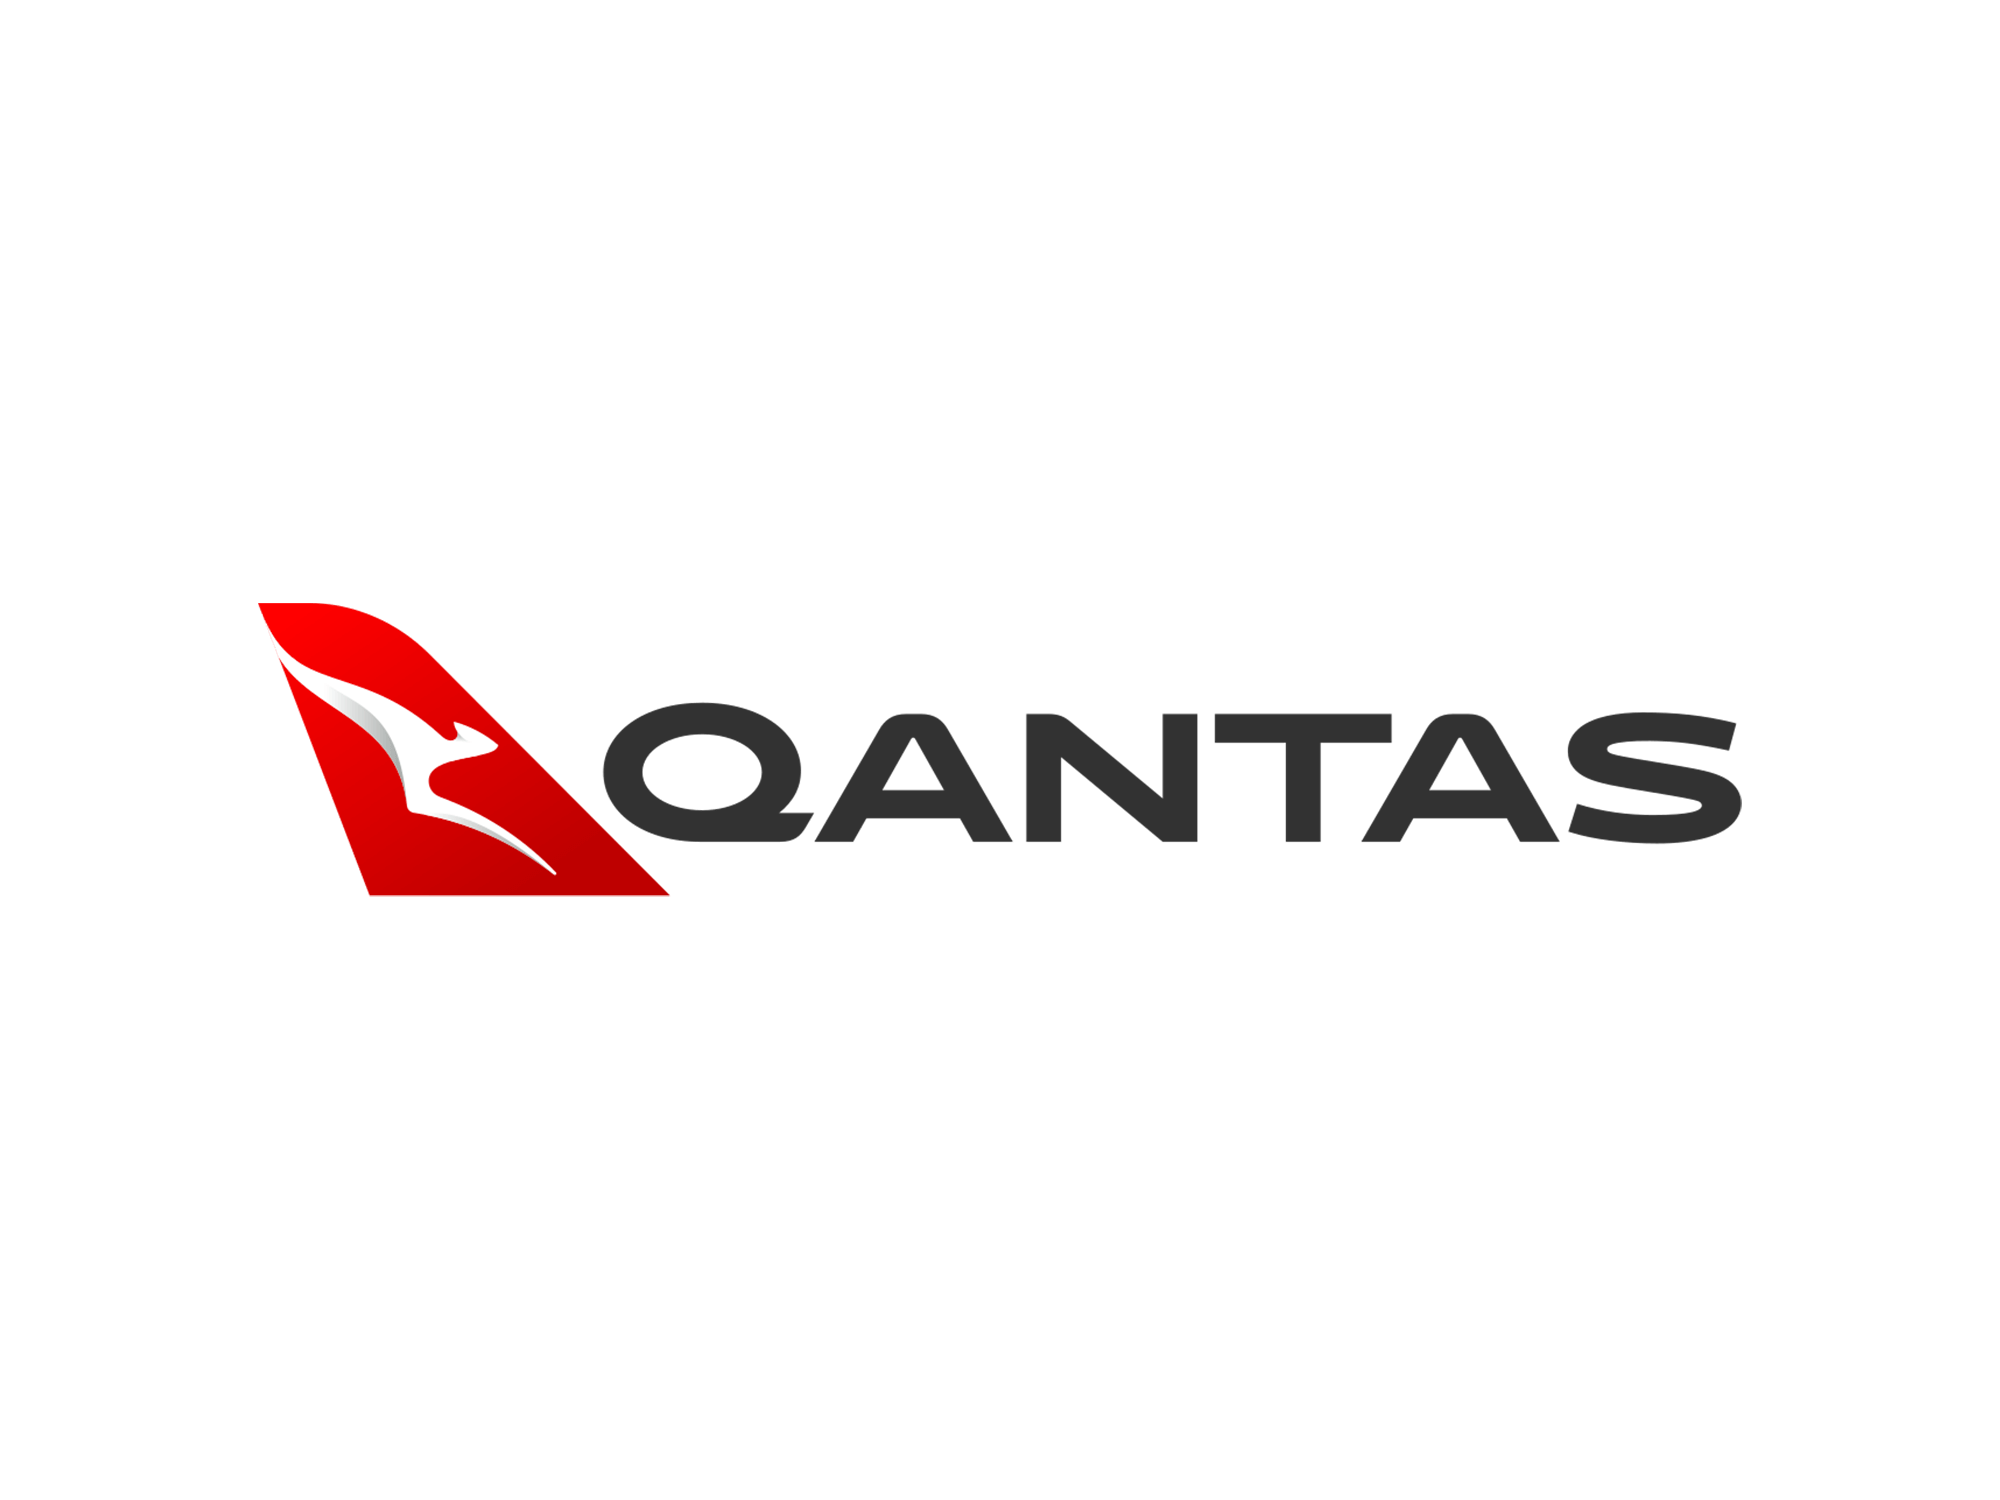 Qantas Brand Value & Company Profile | Brandirectory